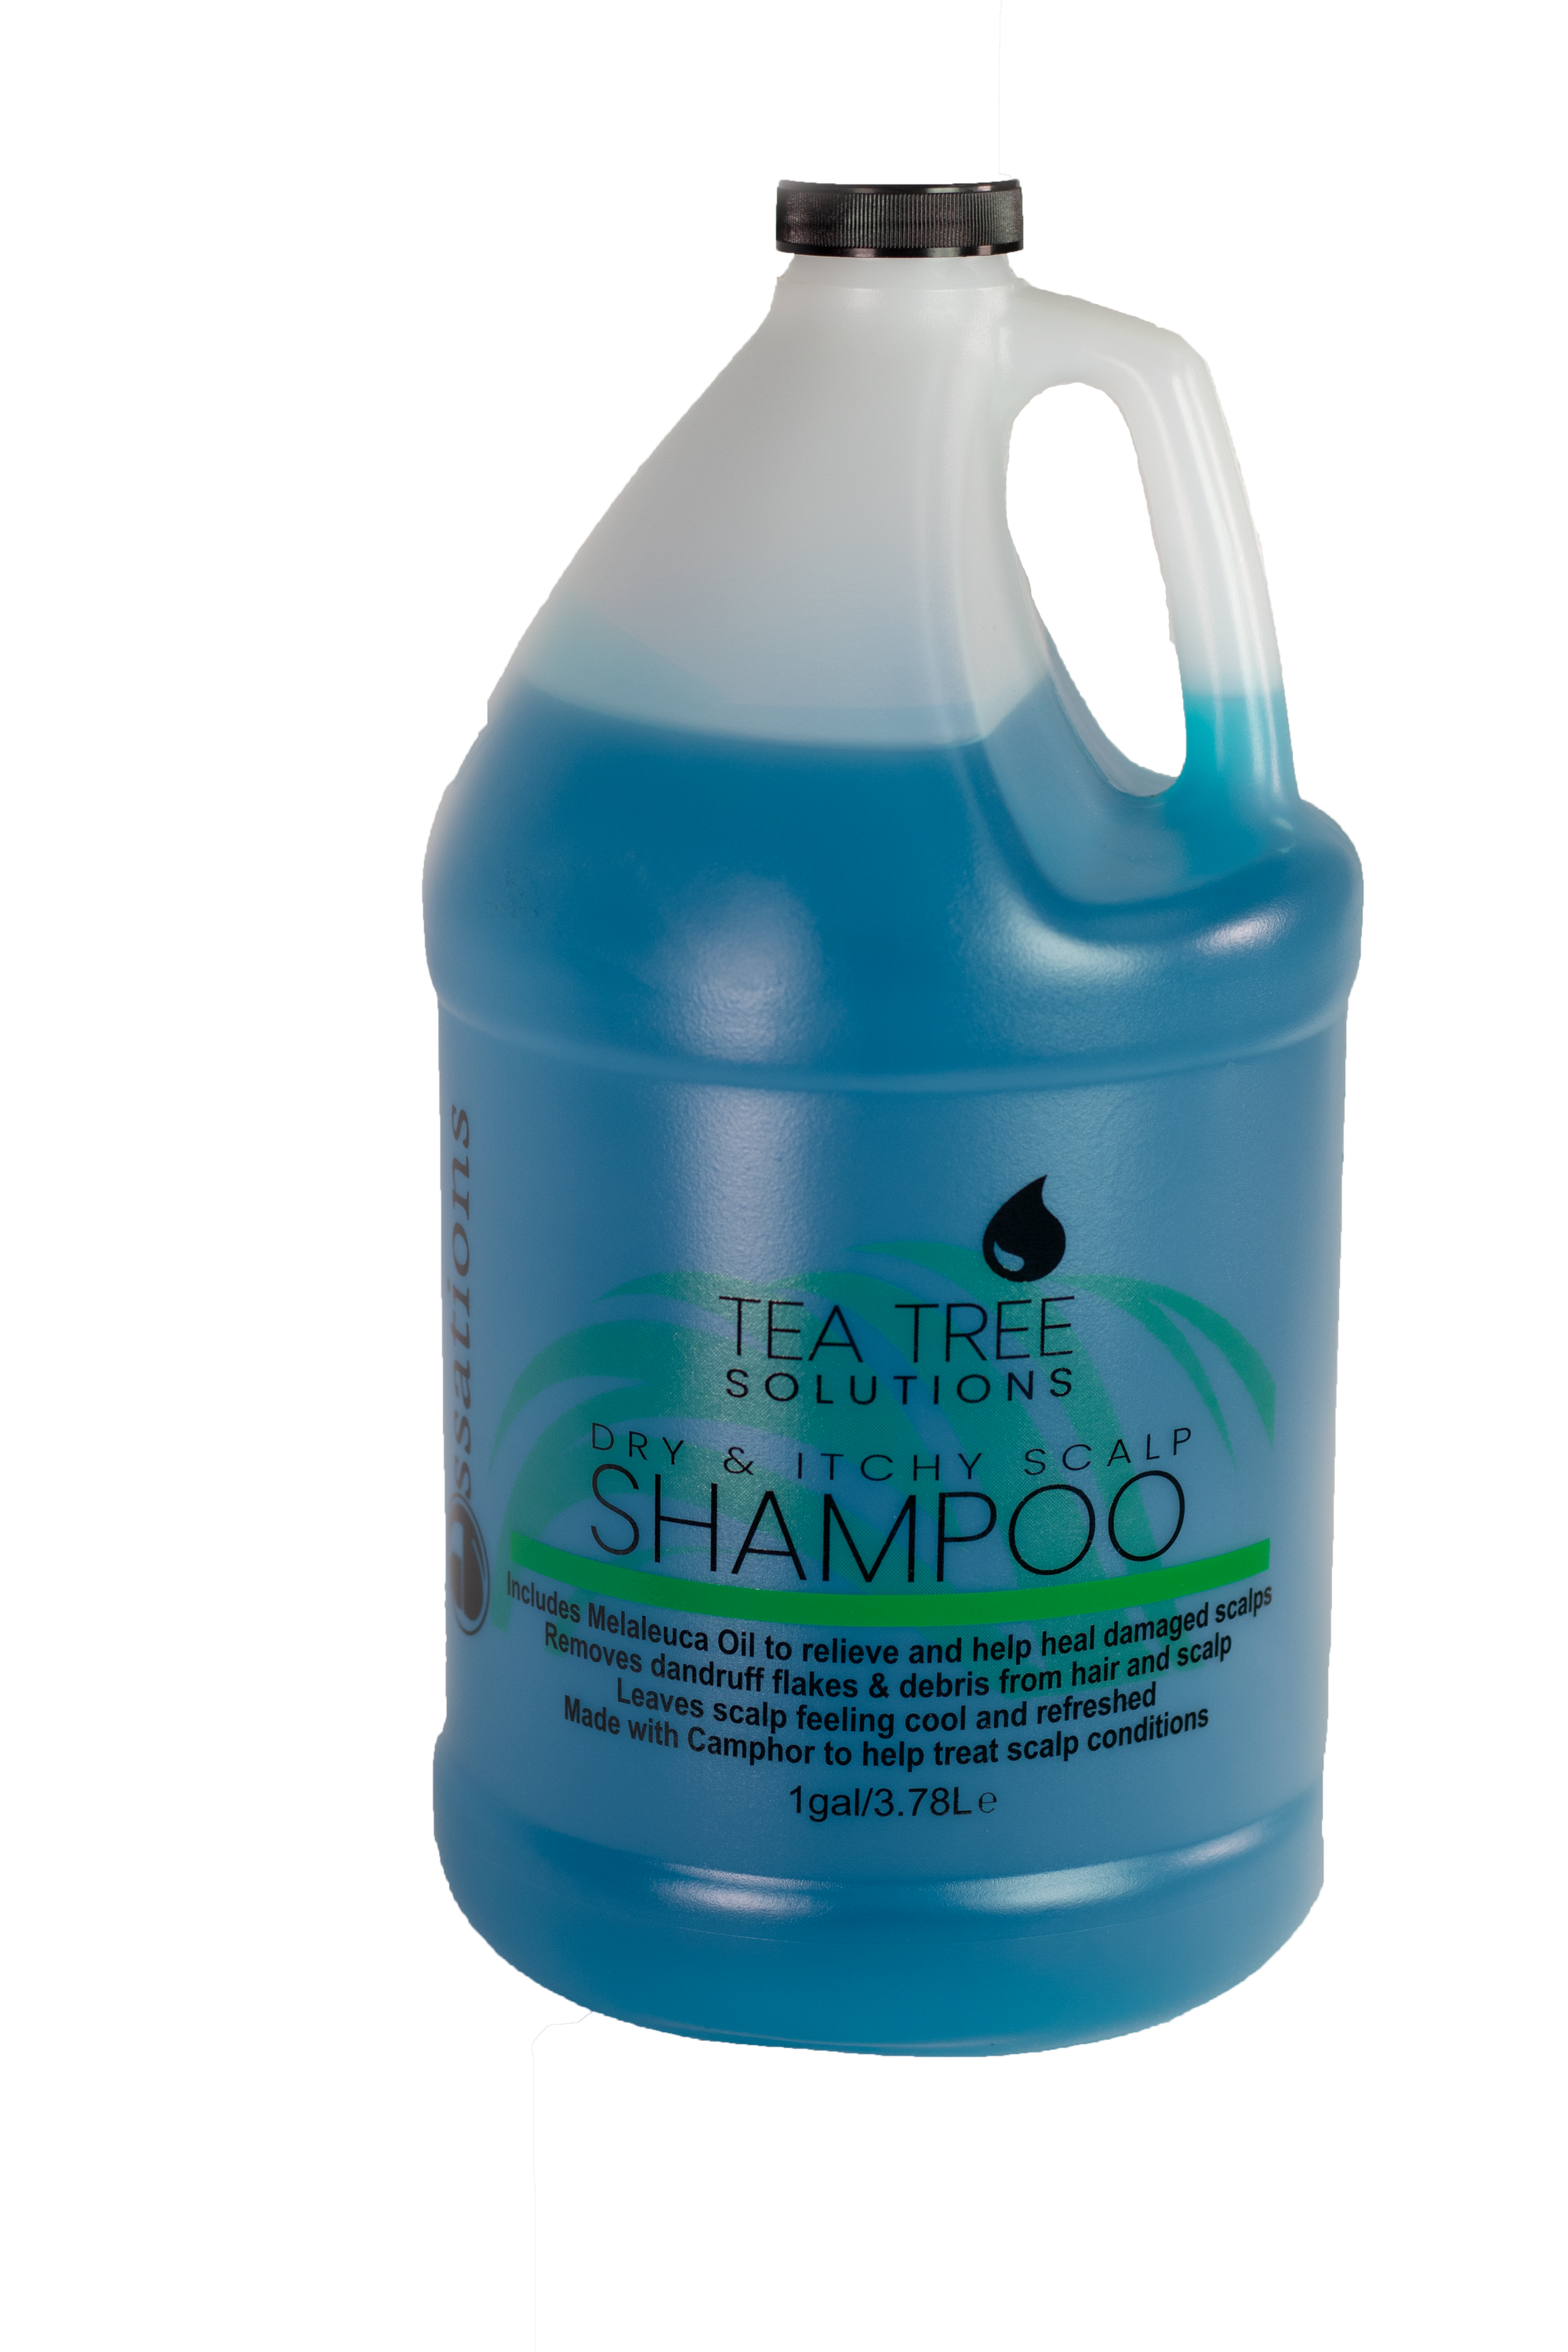 Essations Tea Tree Dry & Itchy Scalp Shampoo